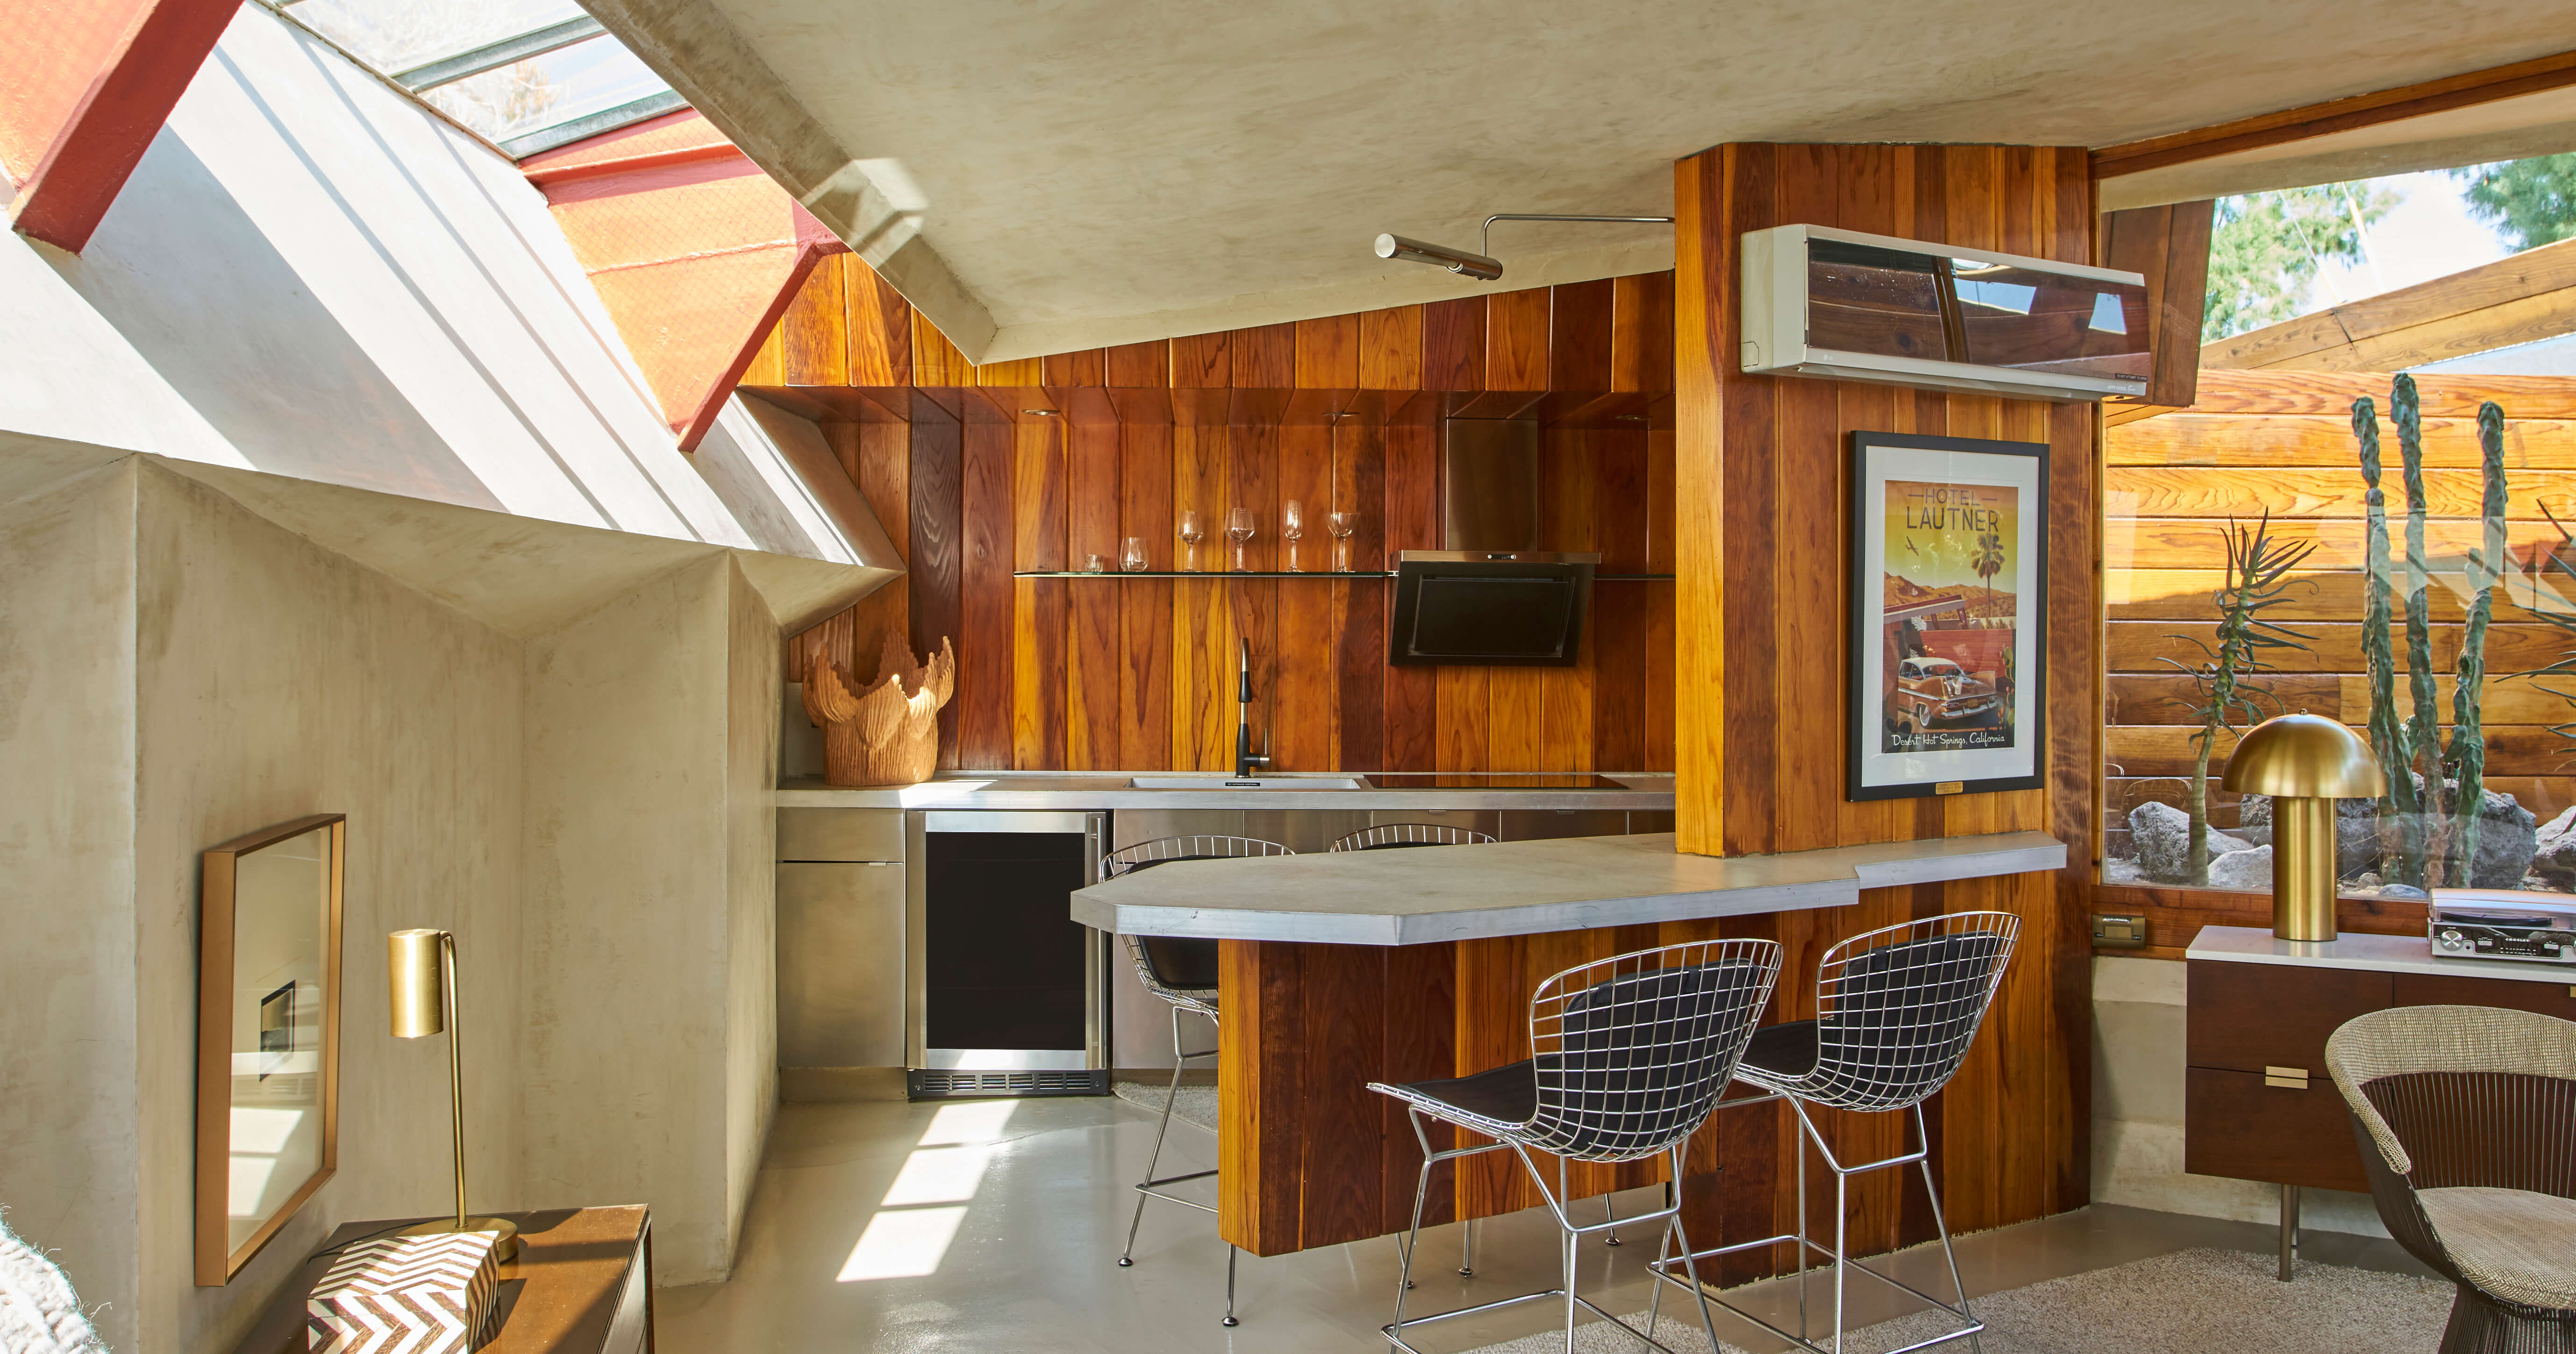 A midcentury modern kitchen design in a home designed by John Lautner.